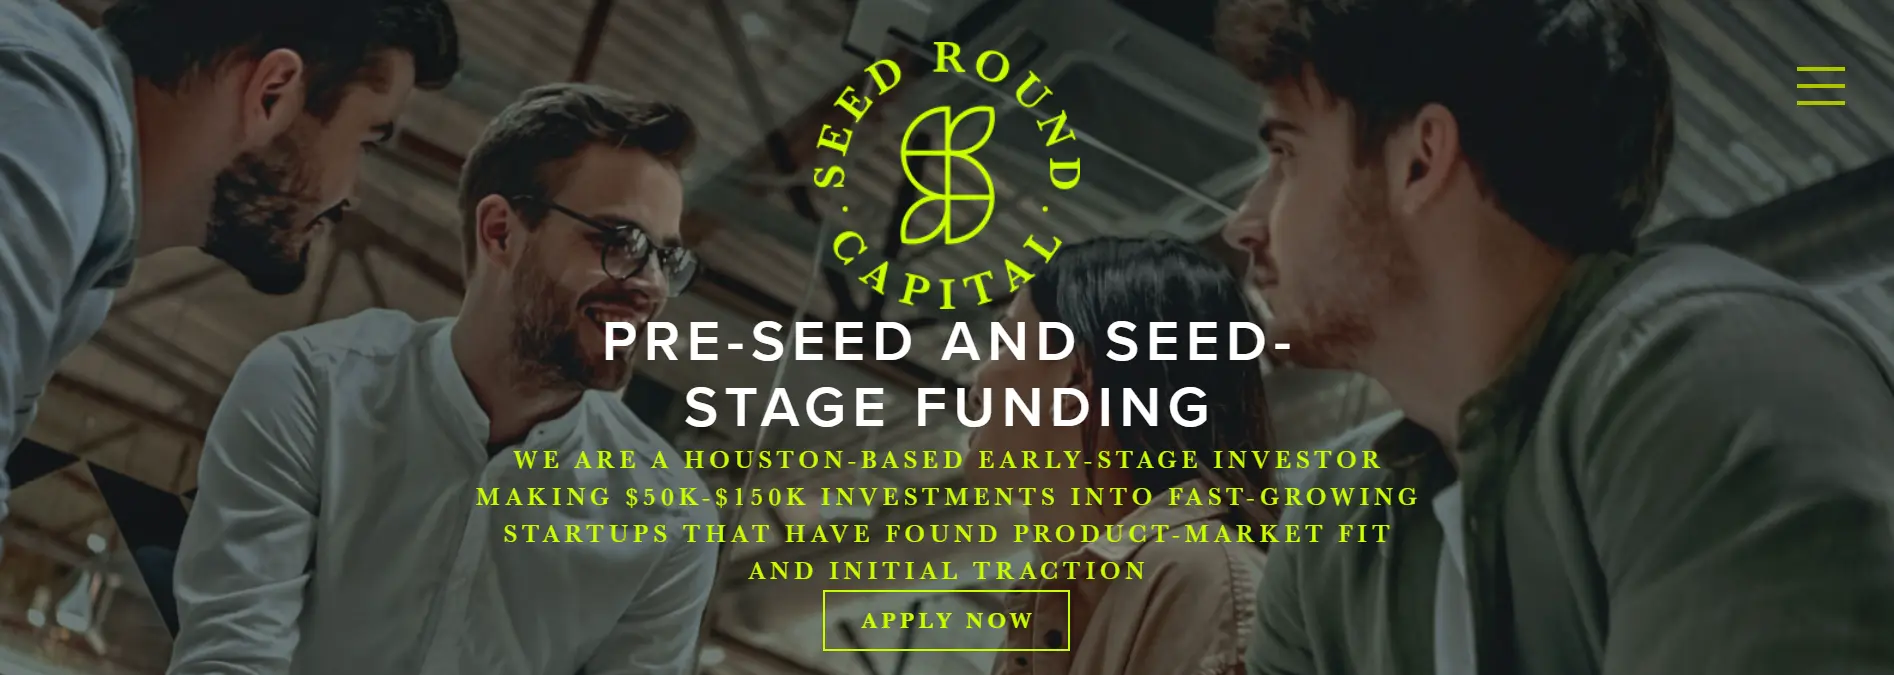 Seed Round Capital